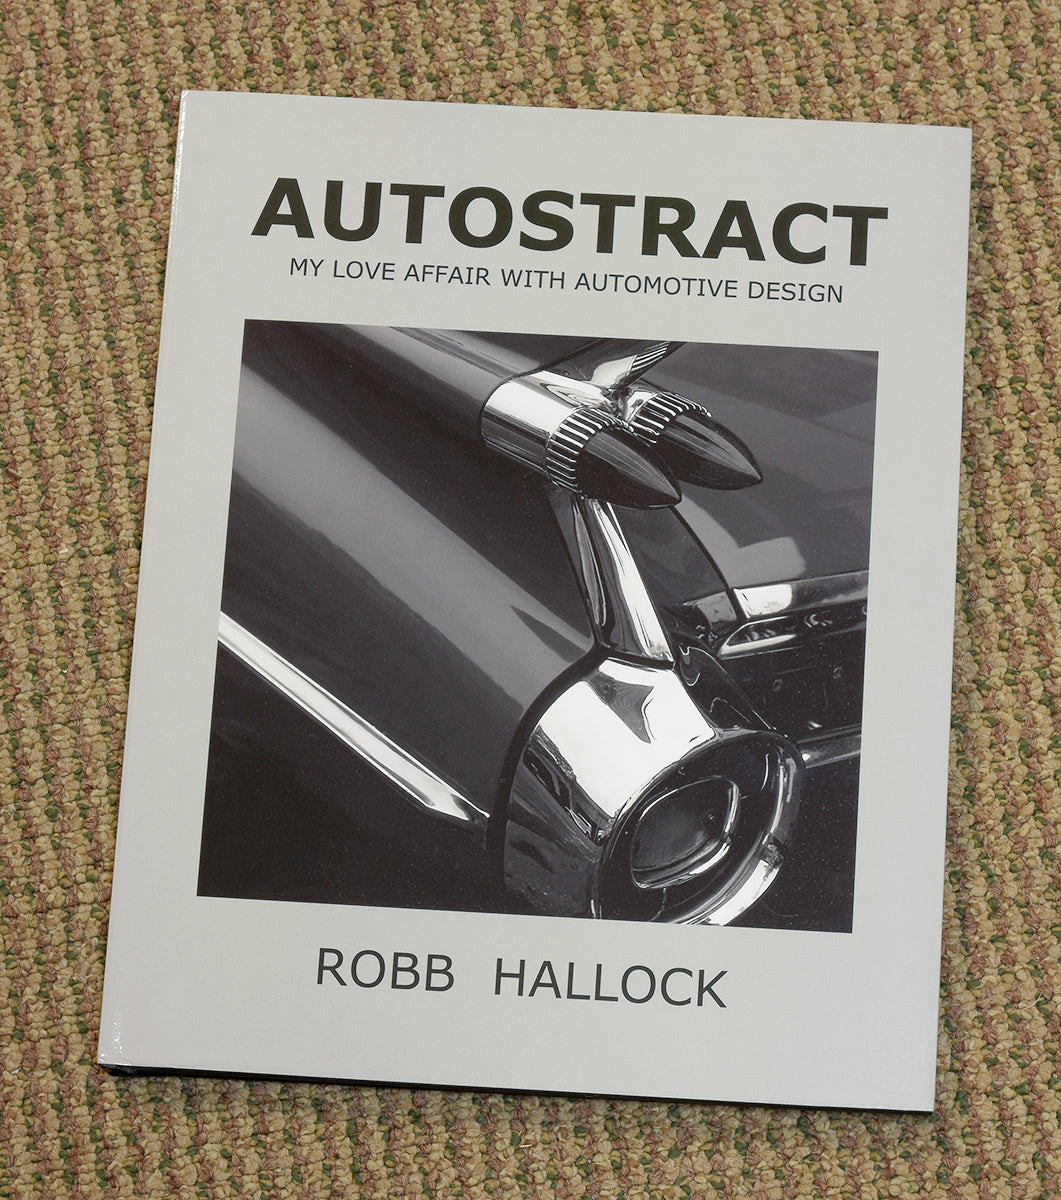 Robb Hallock - "Autostract - My Love Affair With Automotive Design"